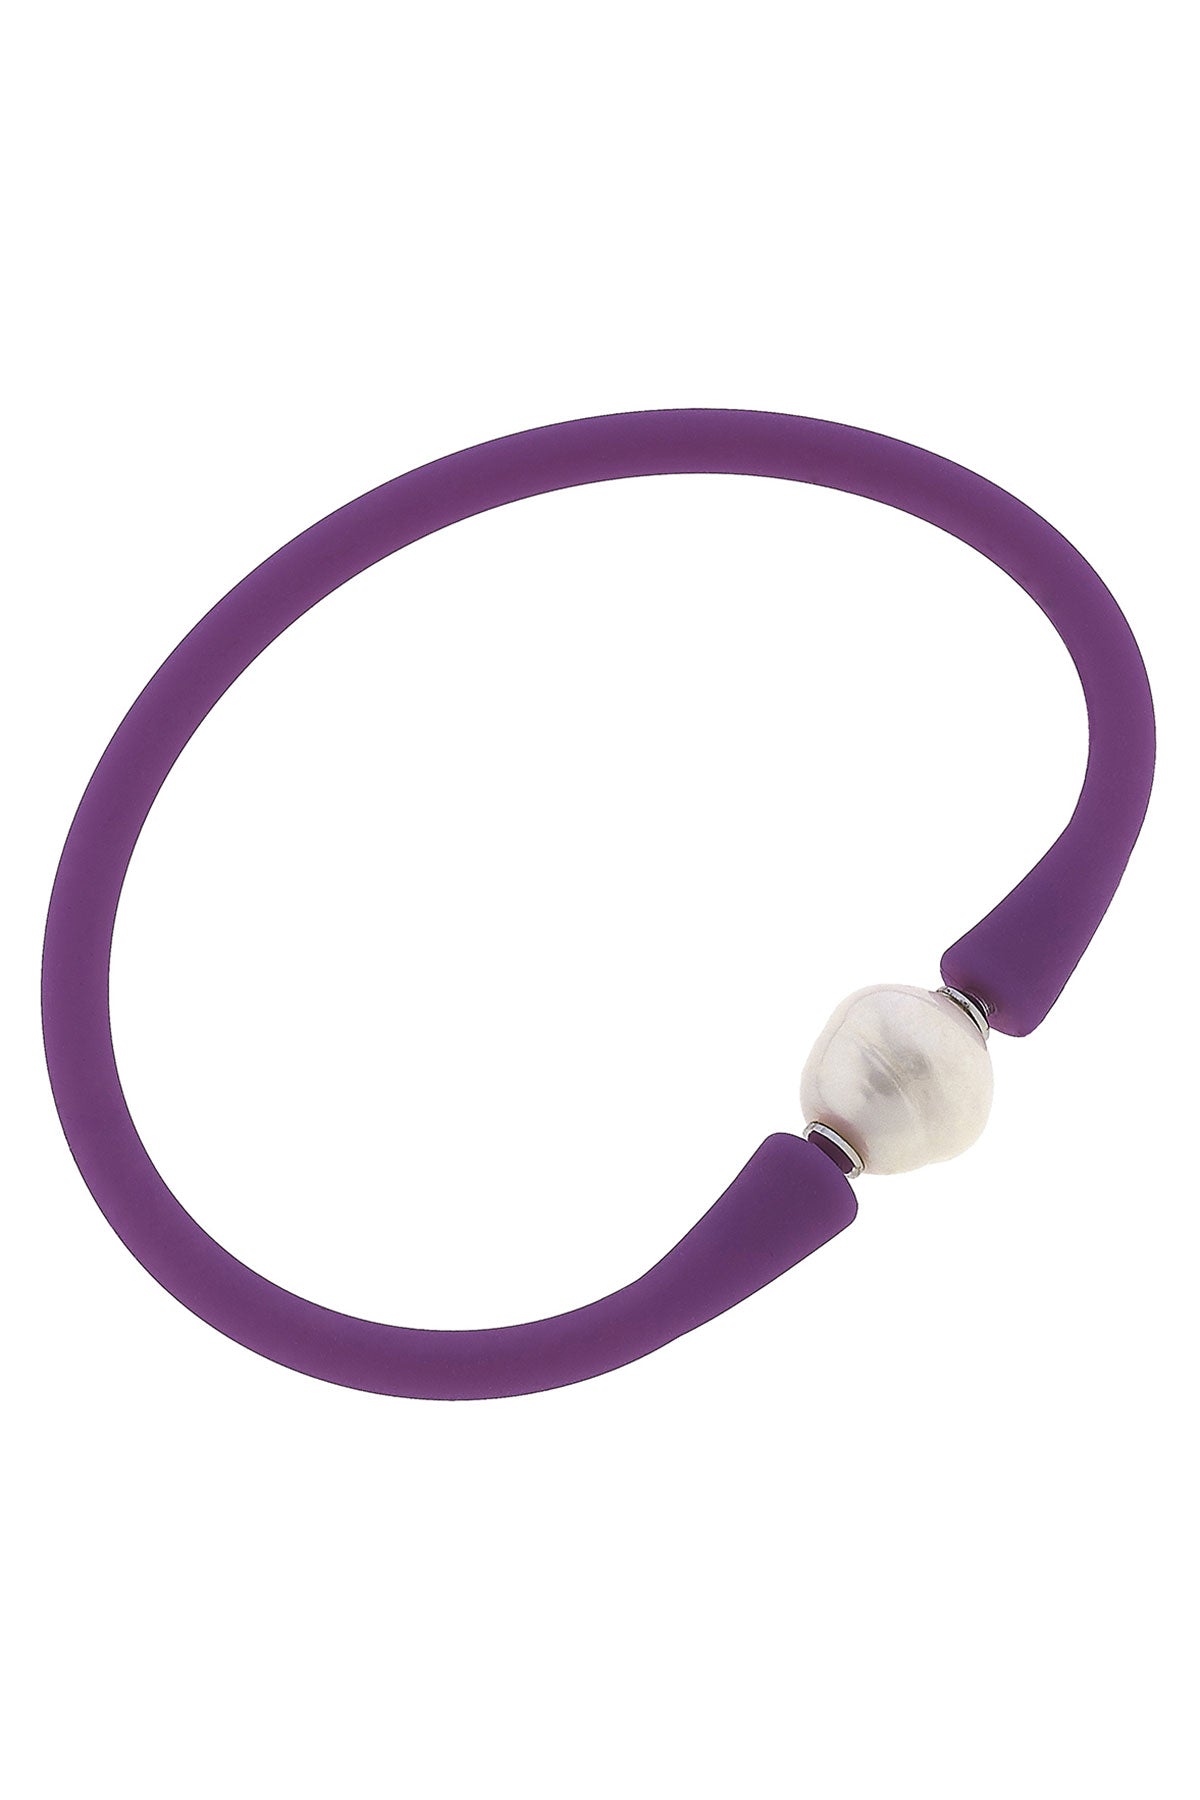 Bali Freshwater Pearl Silicone Bracelet in Purple